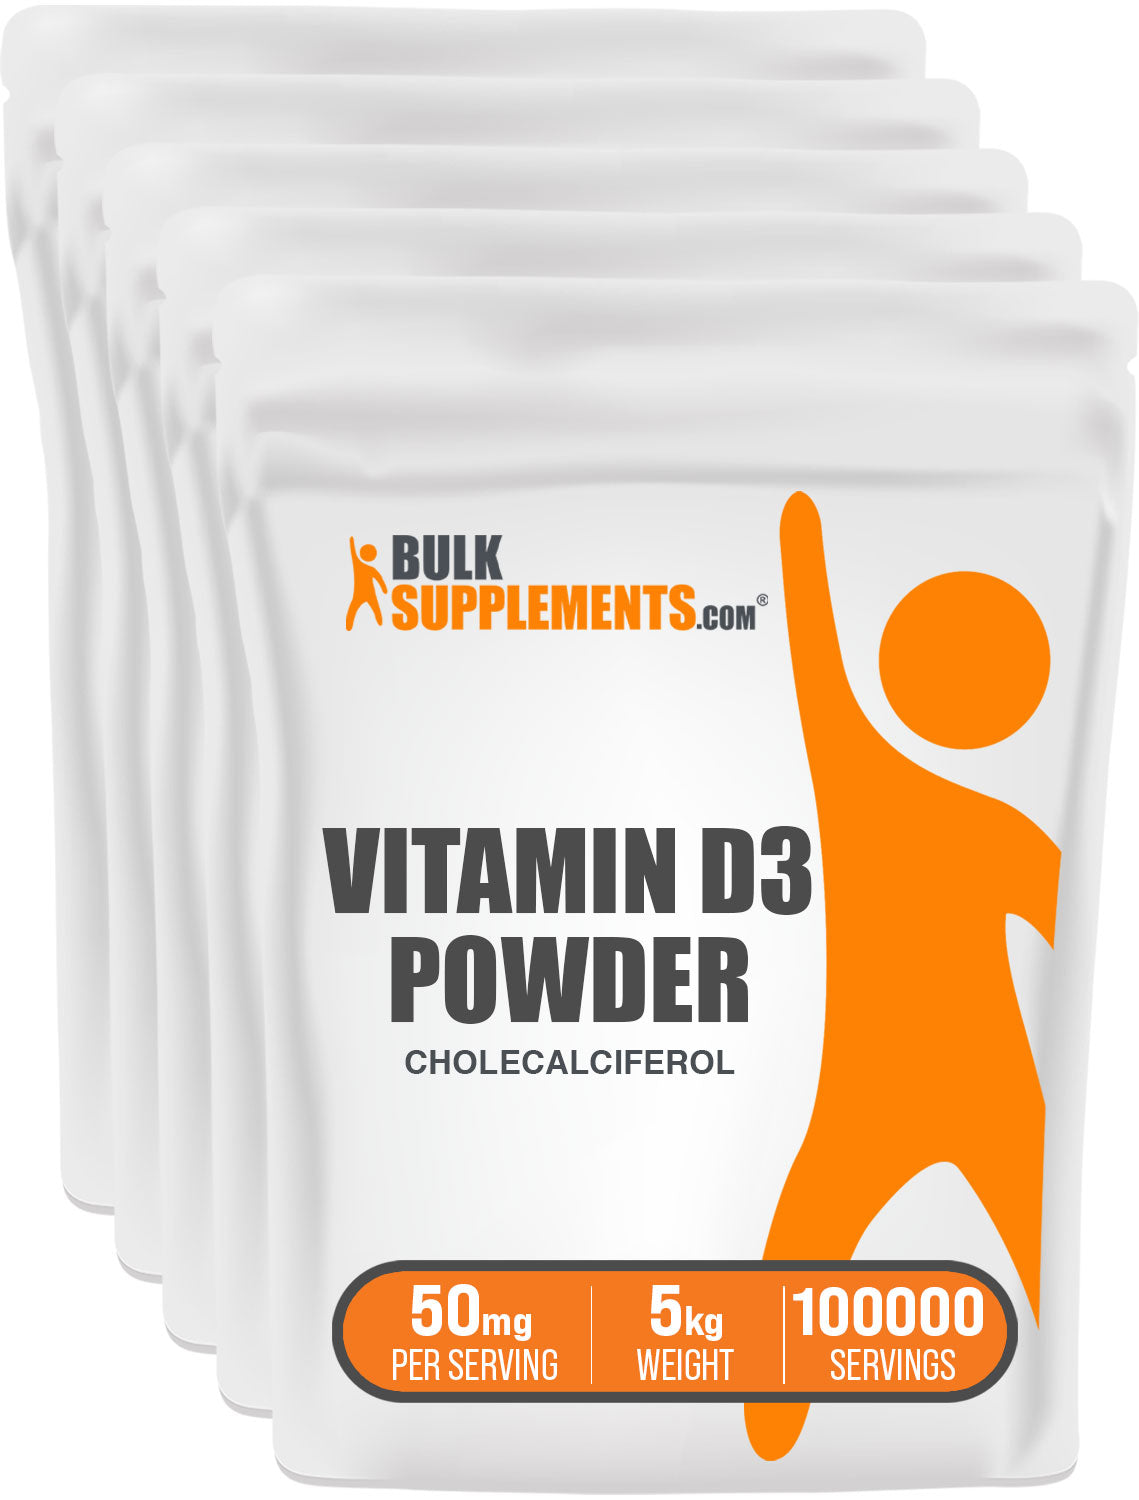 BulkSupplements Vitamin D3 Powder Cholecalciferol 5kg bag